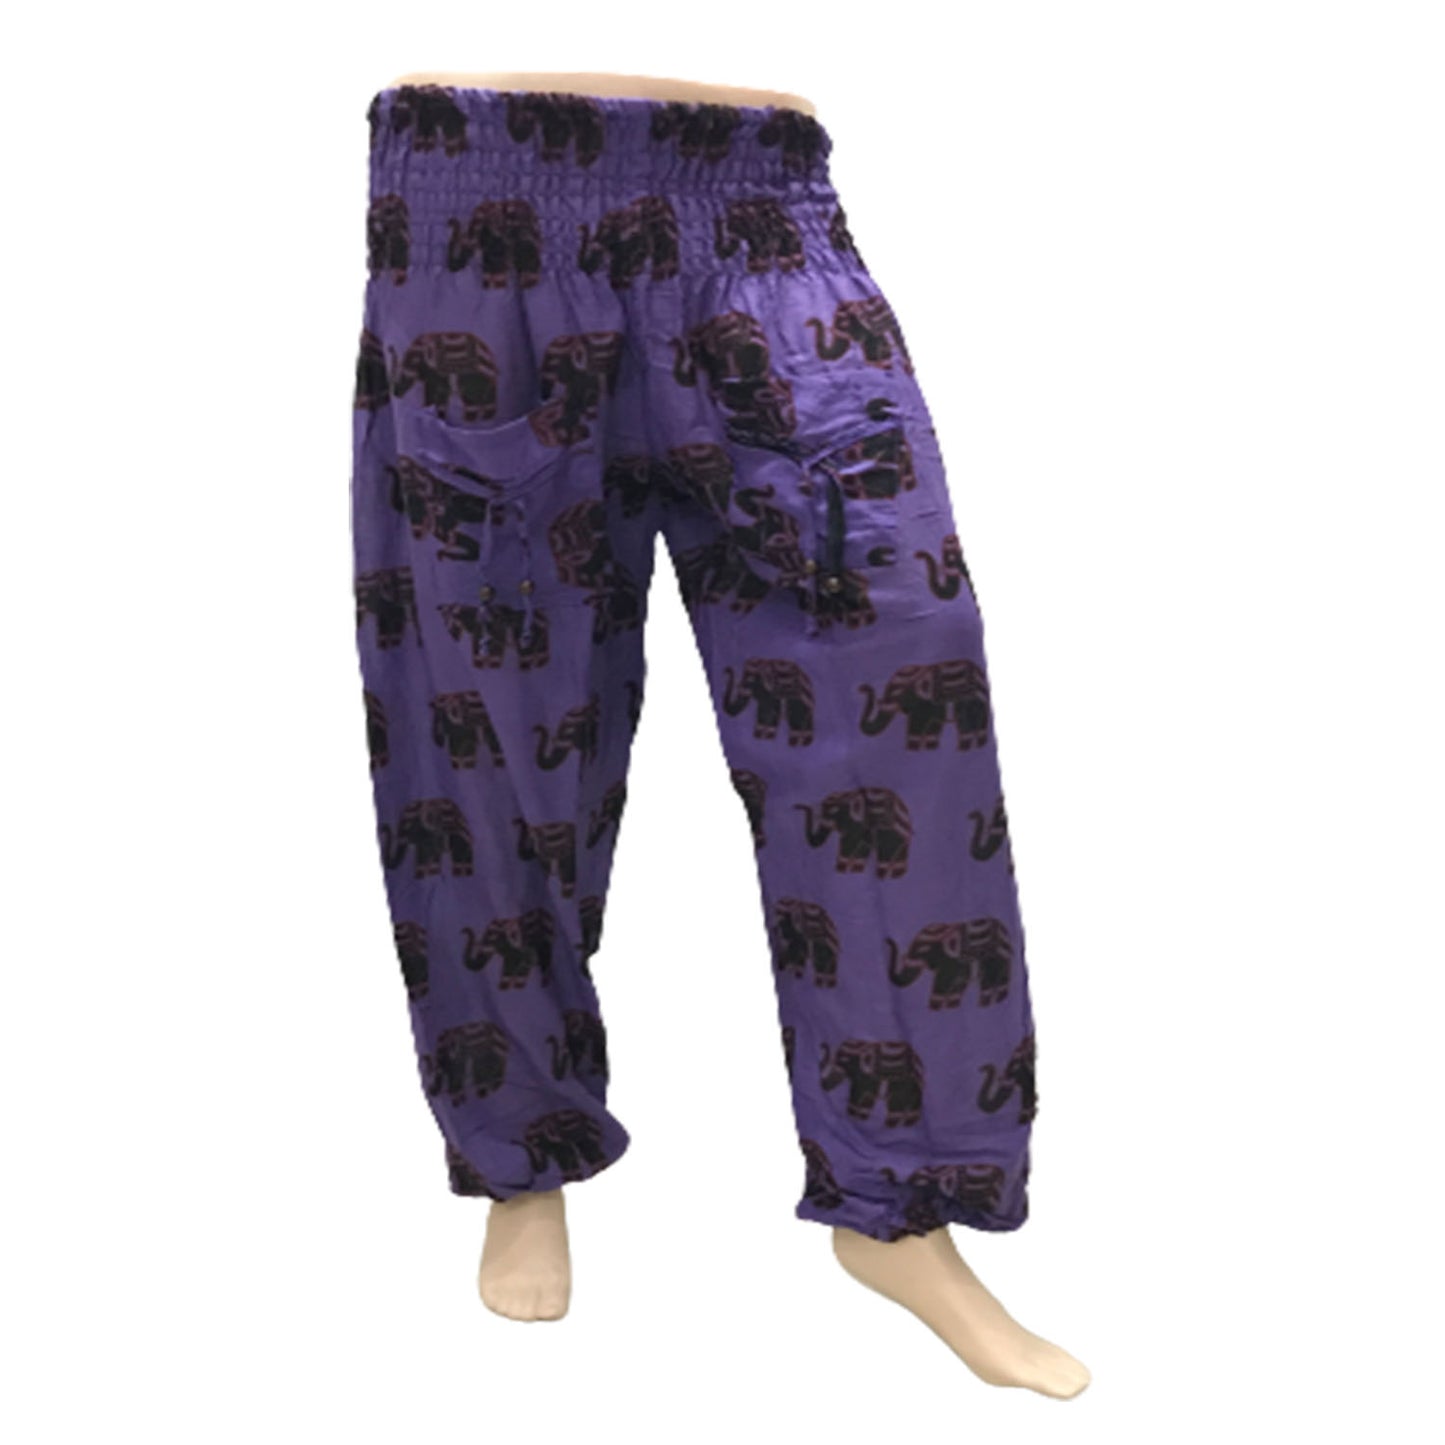 Ganesha Handicrafts, Cuffed Elephant Print Casual Trousers, Cuffed Casual Trousers, Elephant Print Trousers, Purple colour Cuffed Elephant Print Casual Trousers.